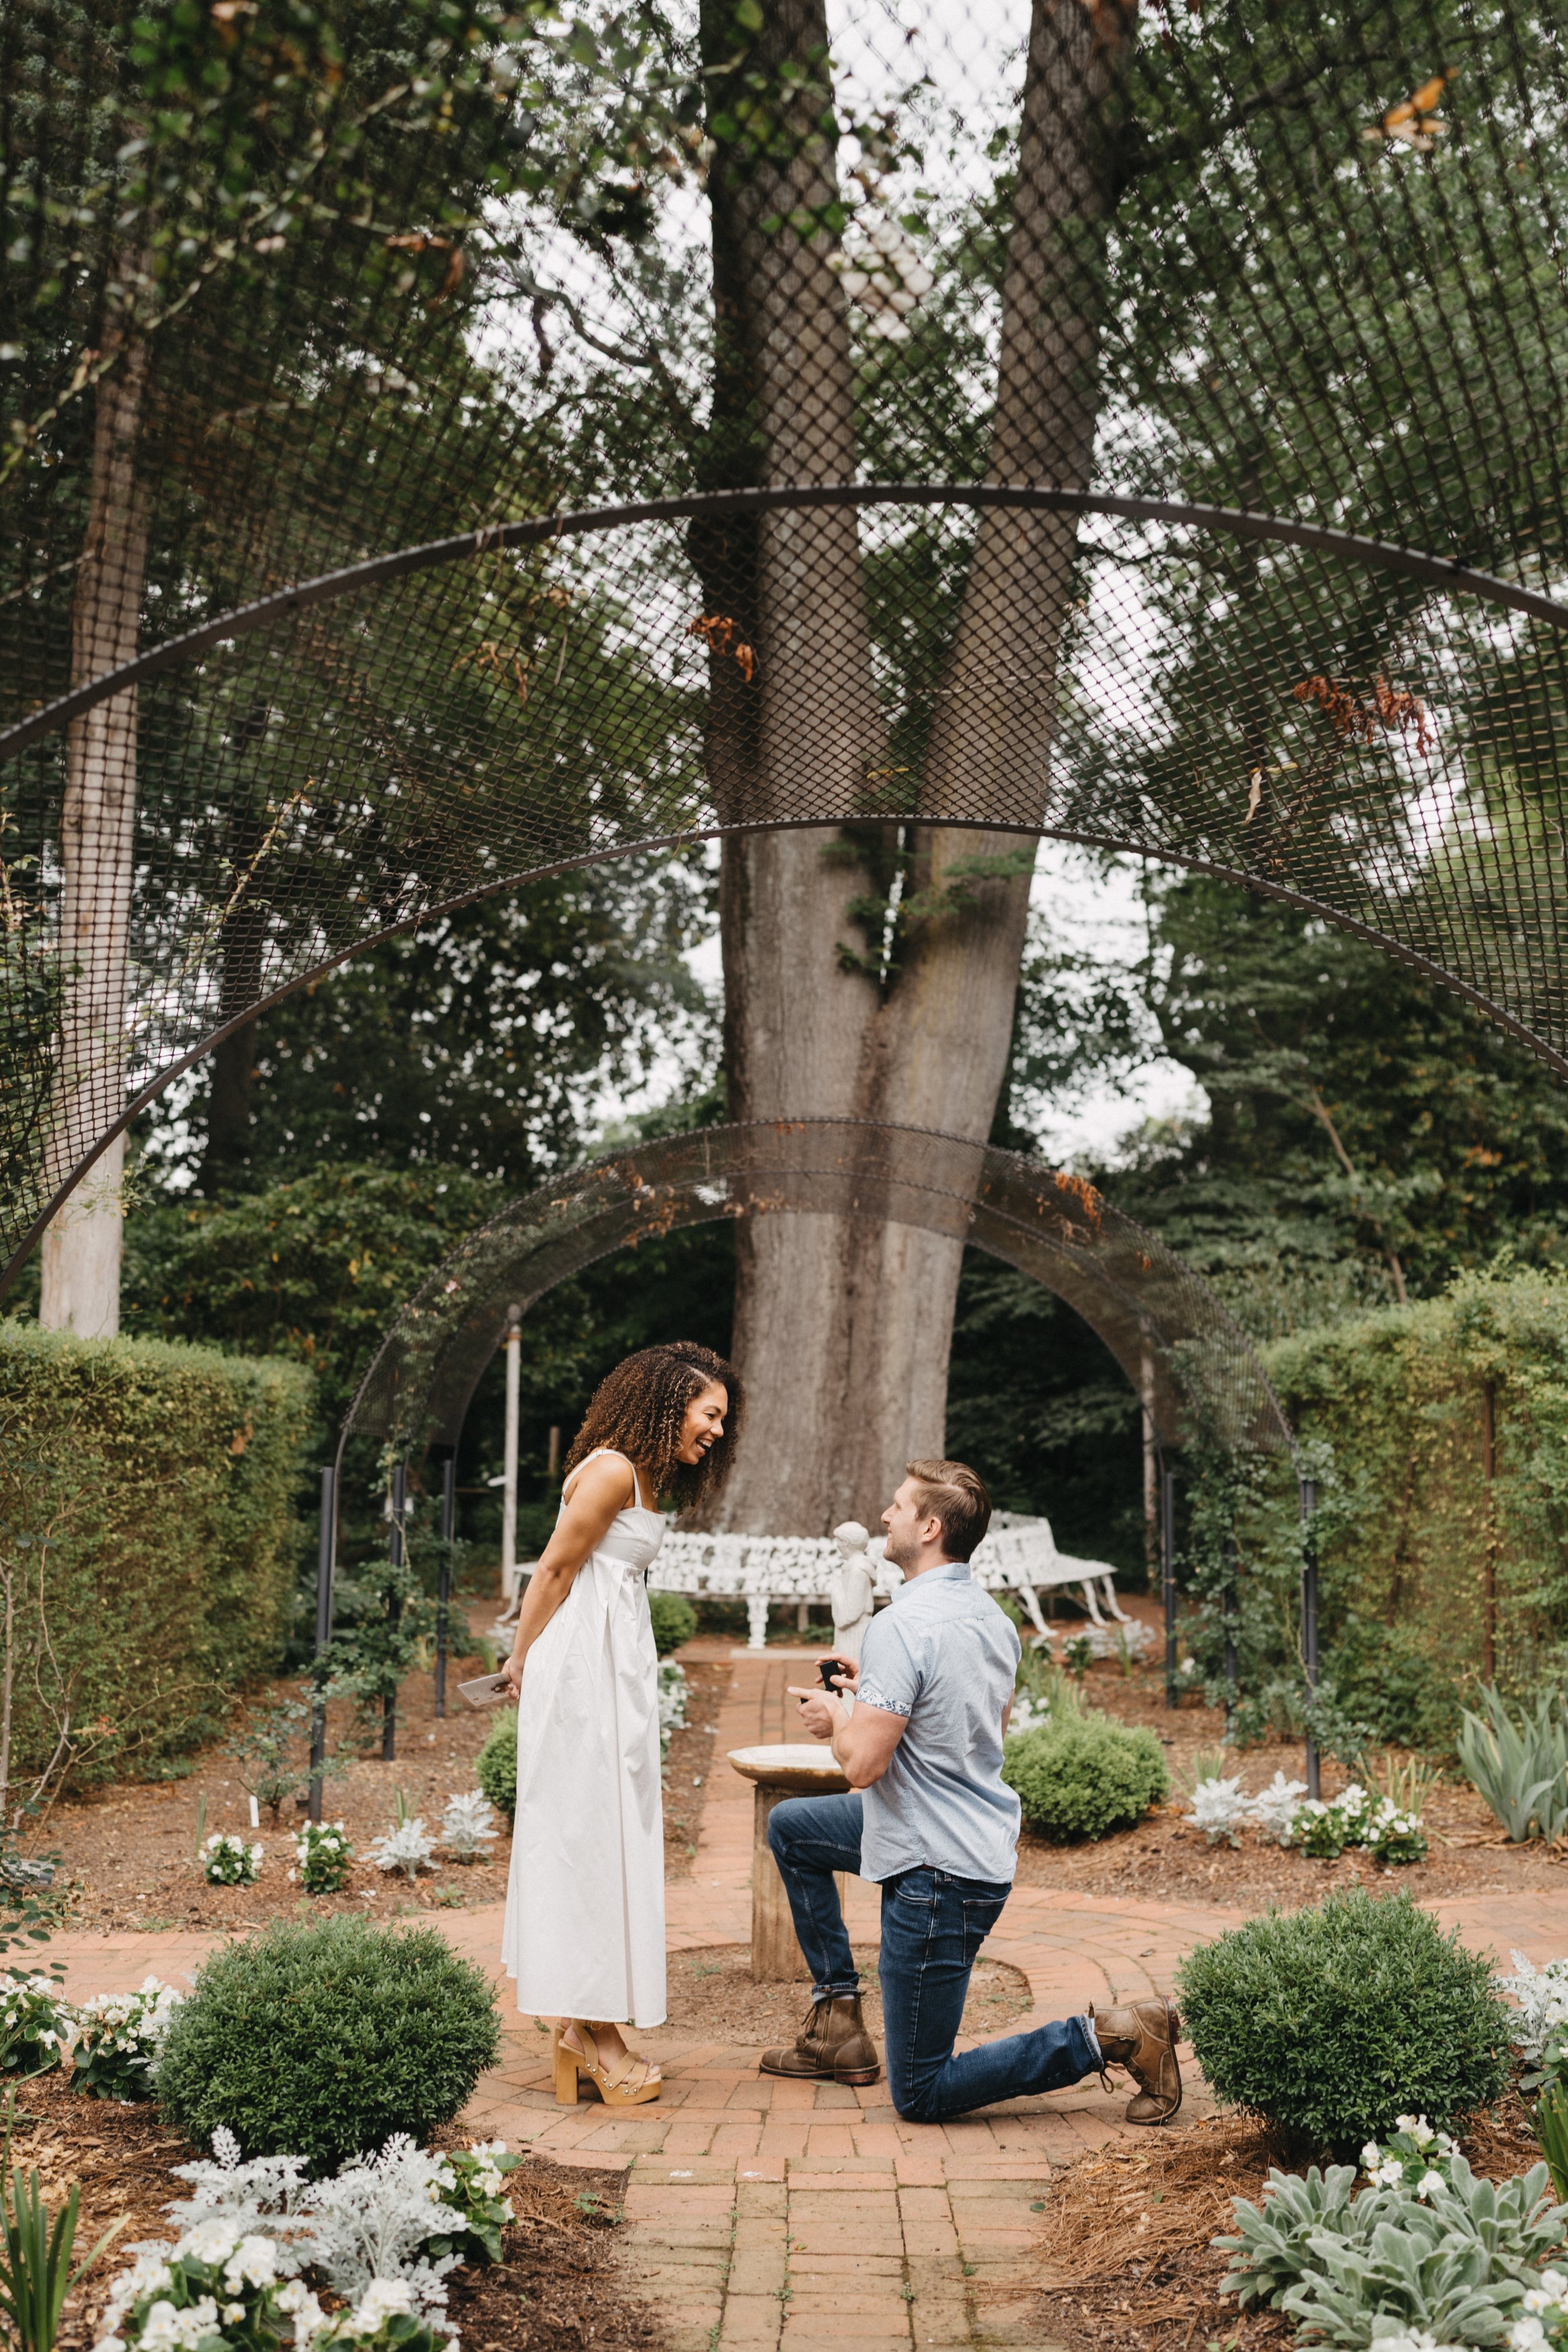  Engagement Photos © Briana Rittenhouse Photography (Instagram - @brianarittenhousephotos / Facebook - @brianarittenhousephotography) 